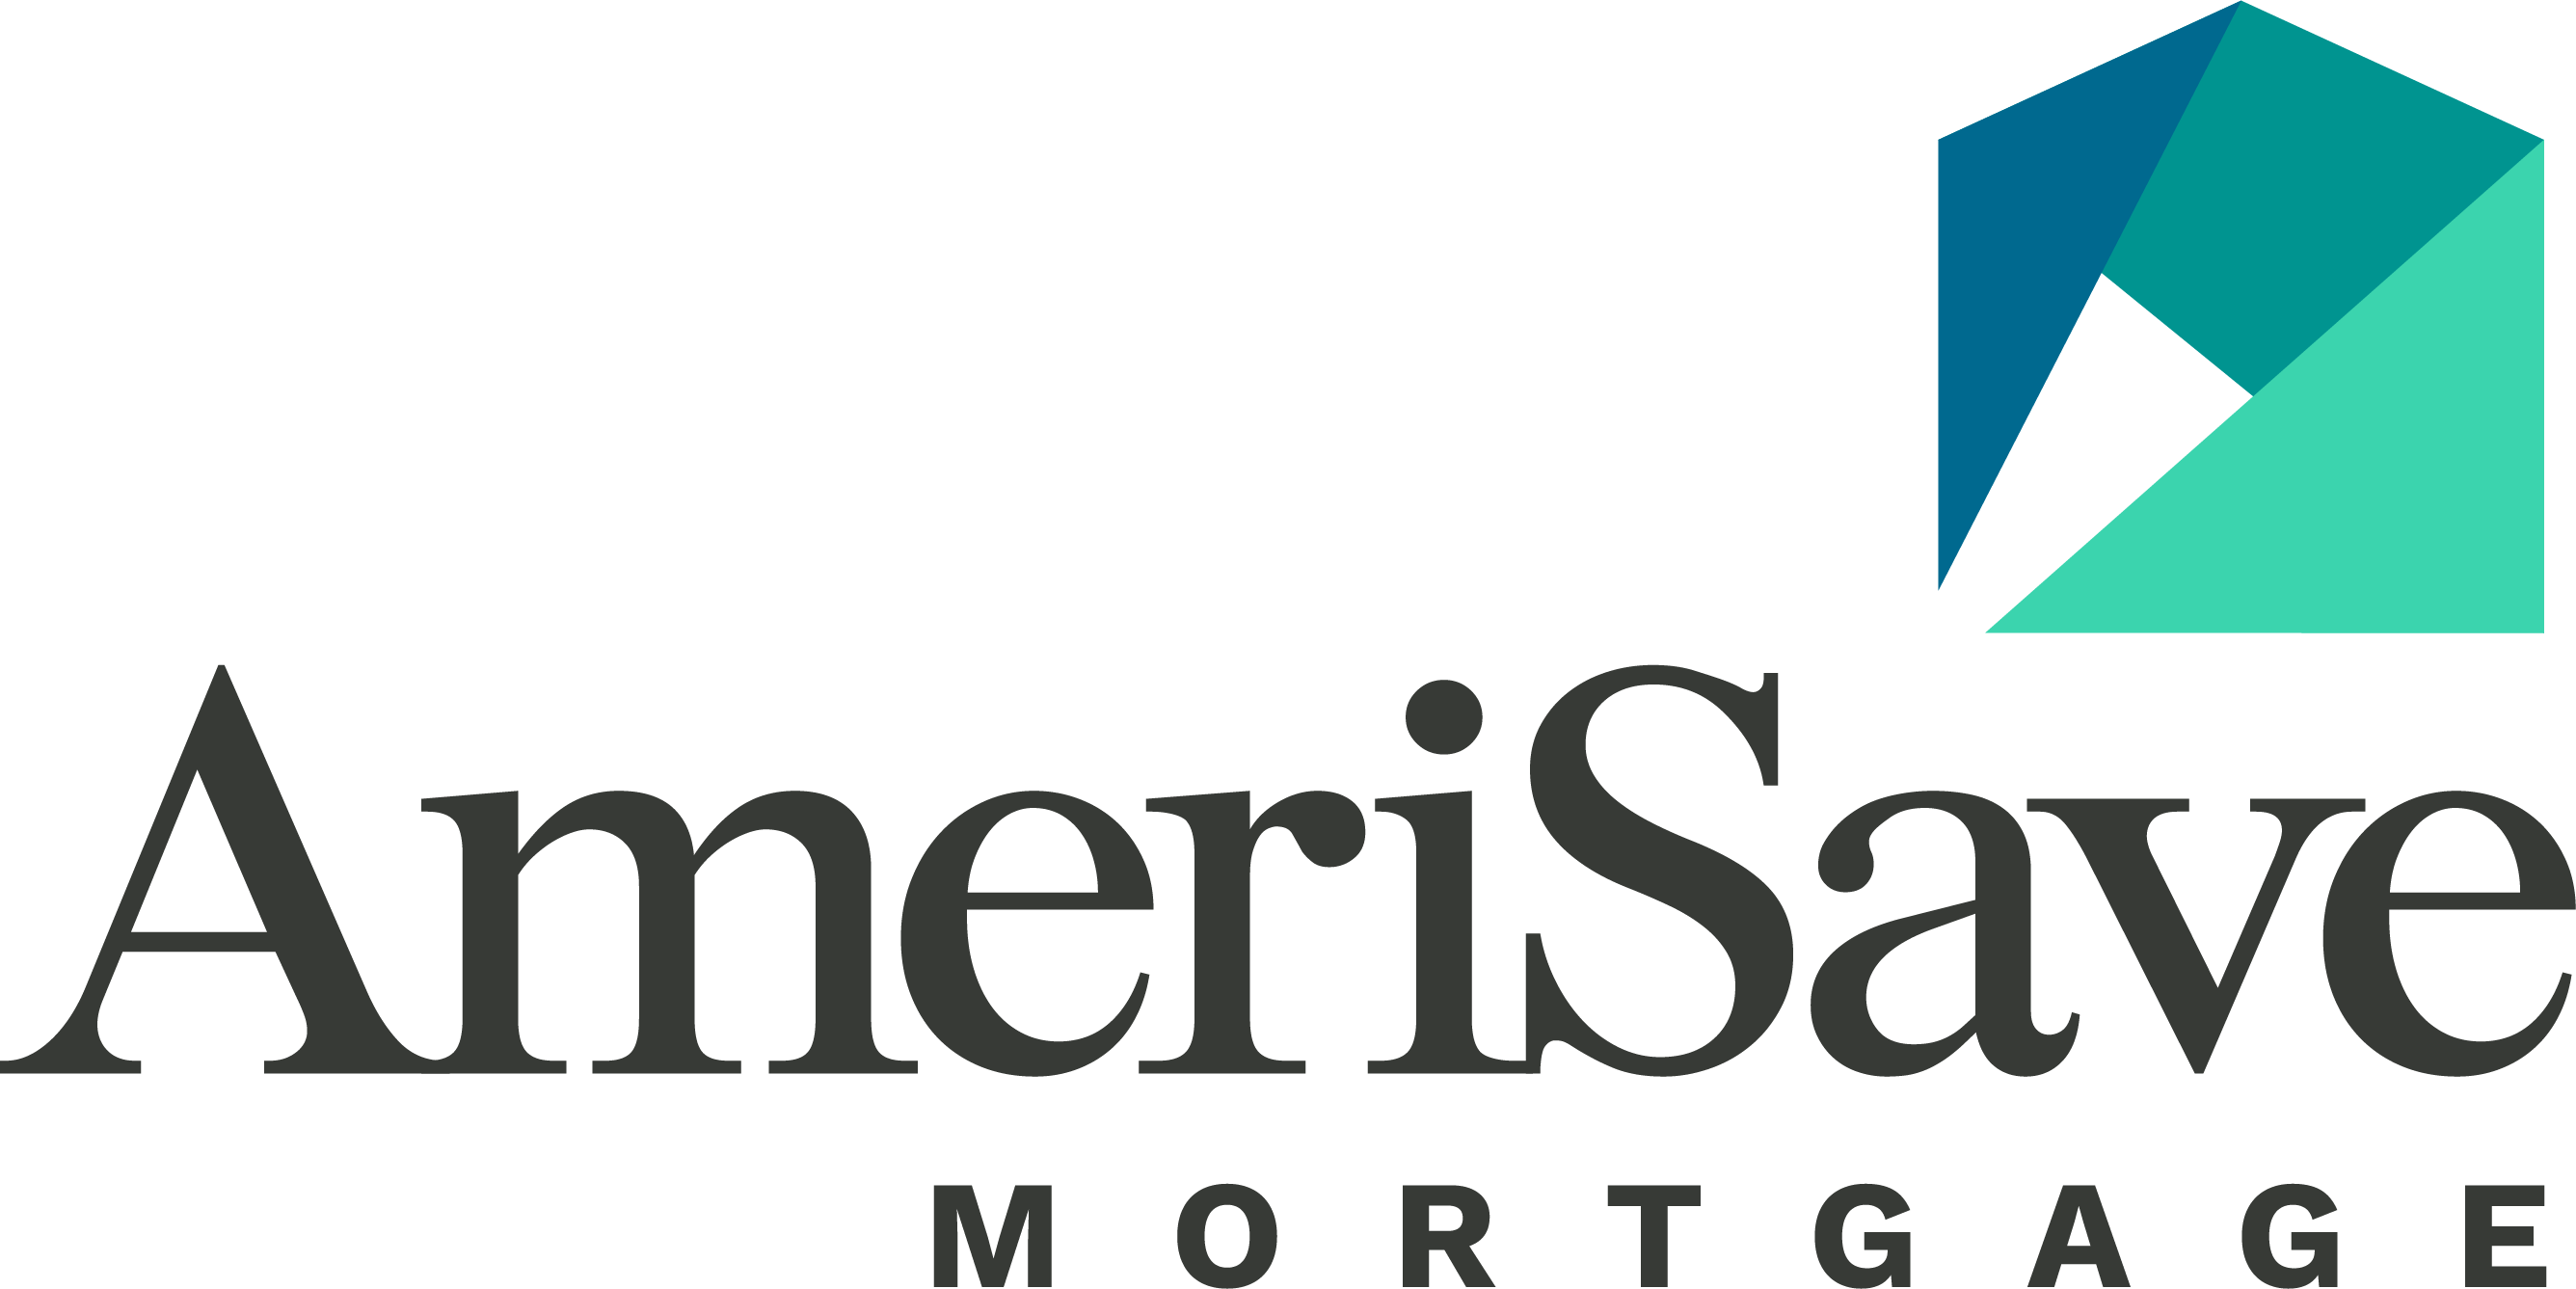 AmeriSave Mortgage Corporation Refinance Reviews (Oct. 2020) | Mortgage